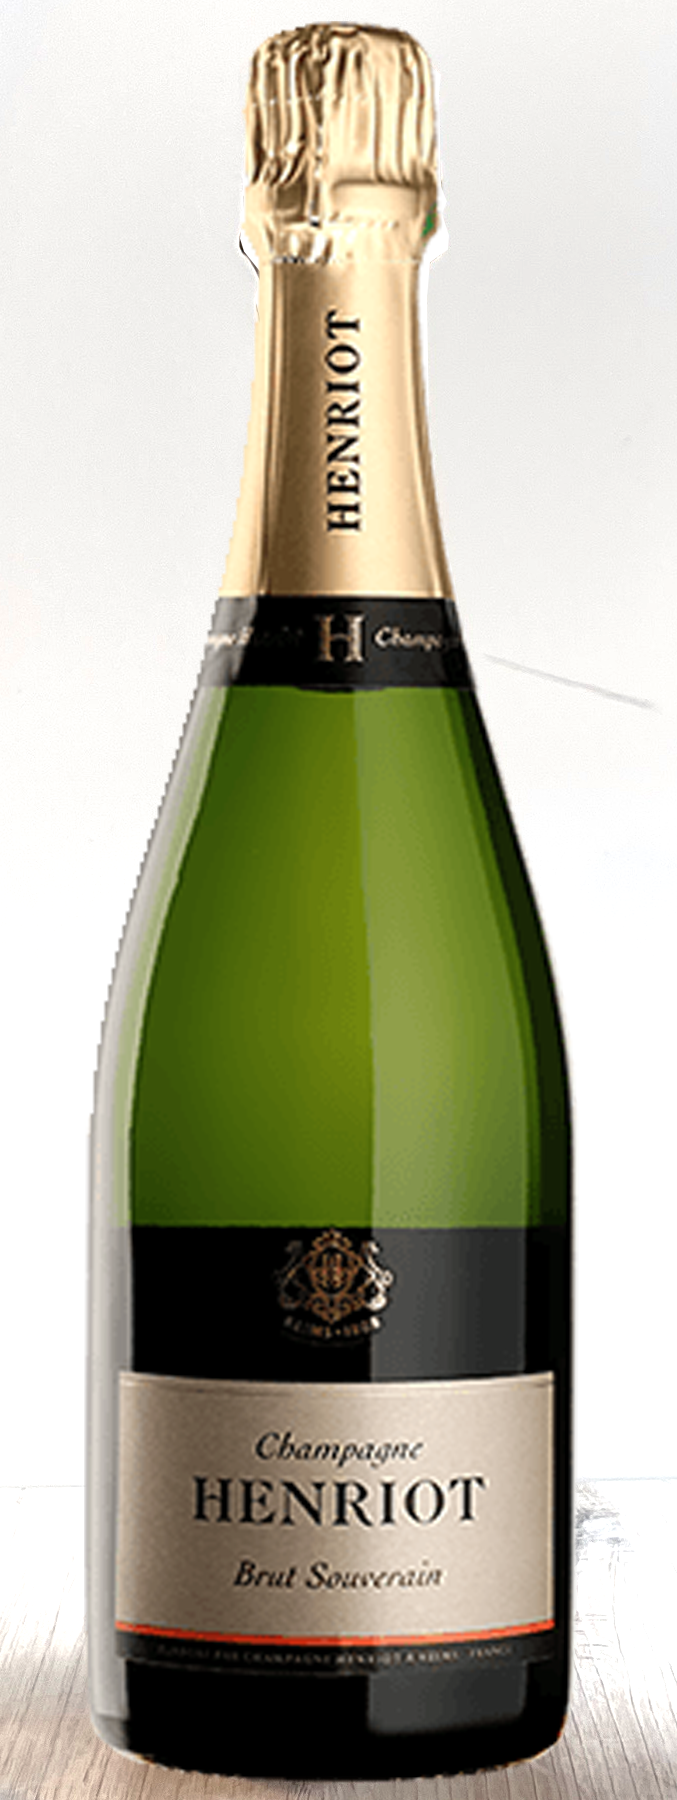 NV Champagne Henriot Brut Souverain